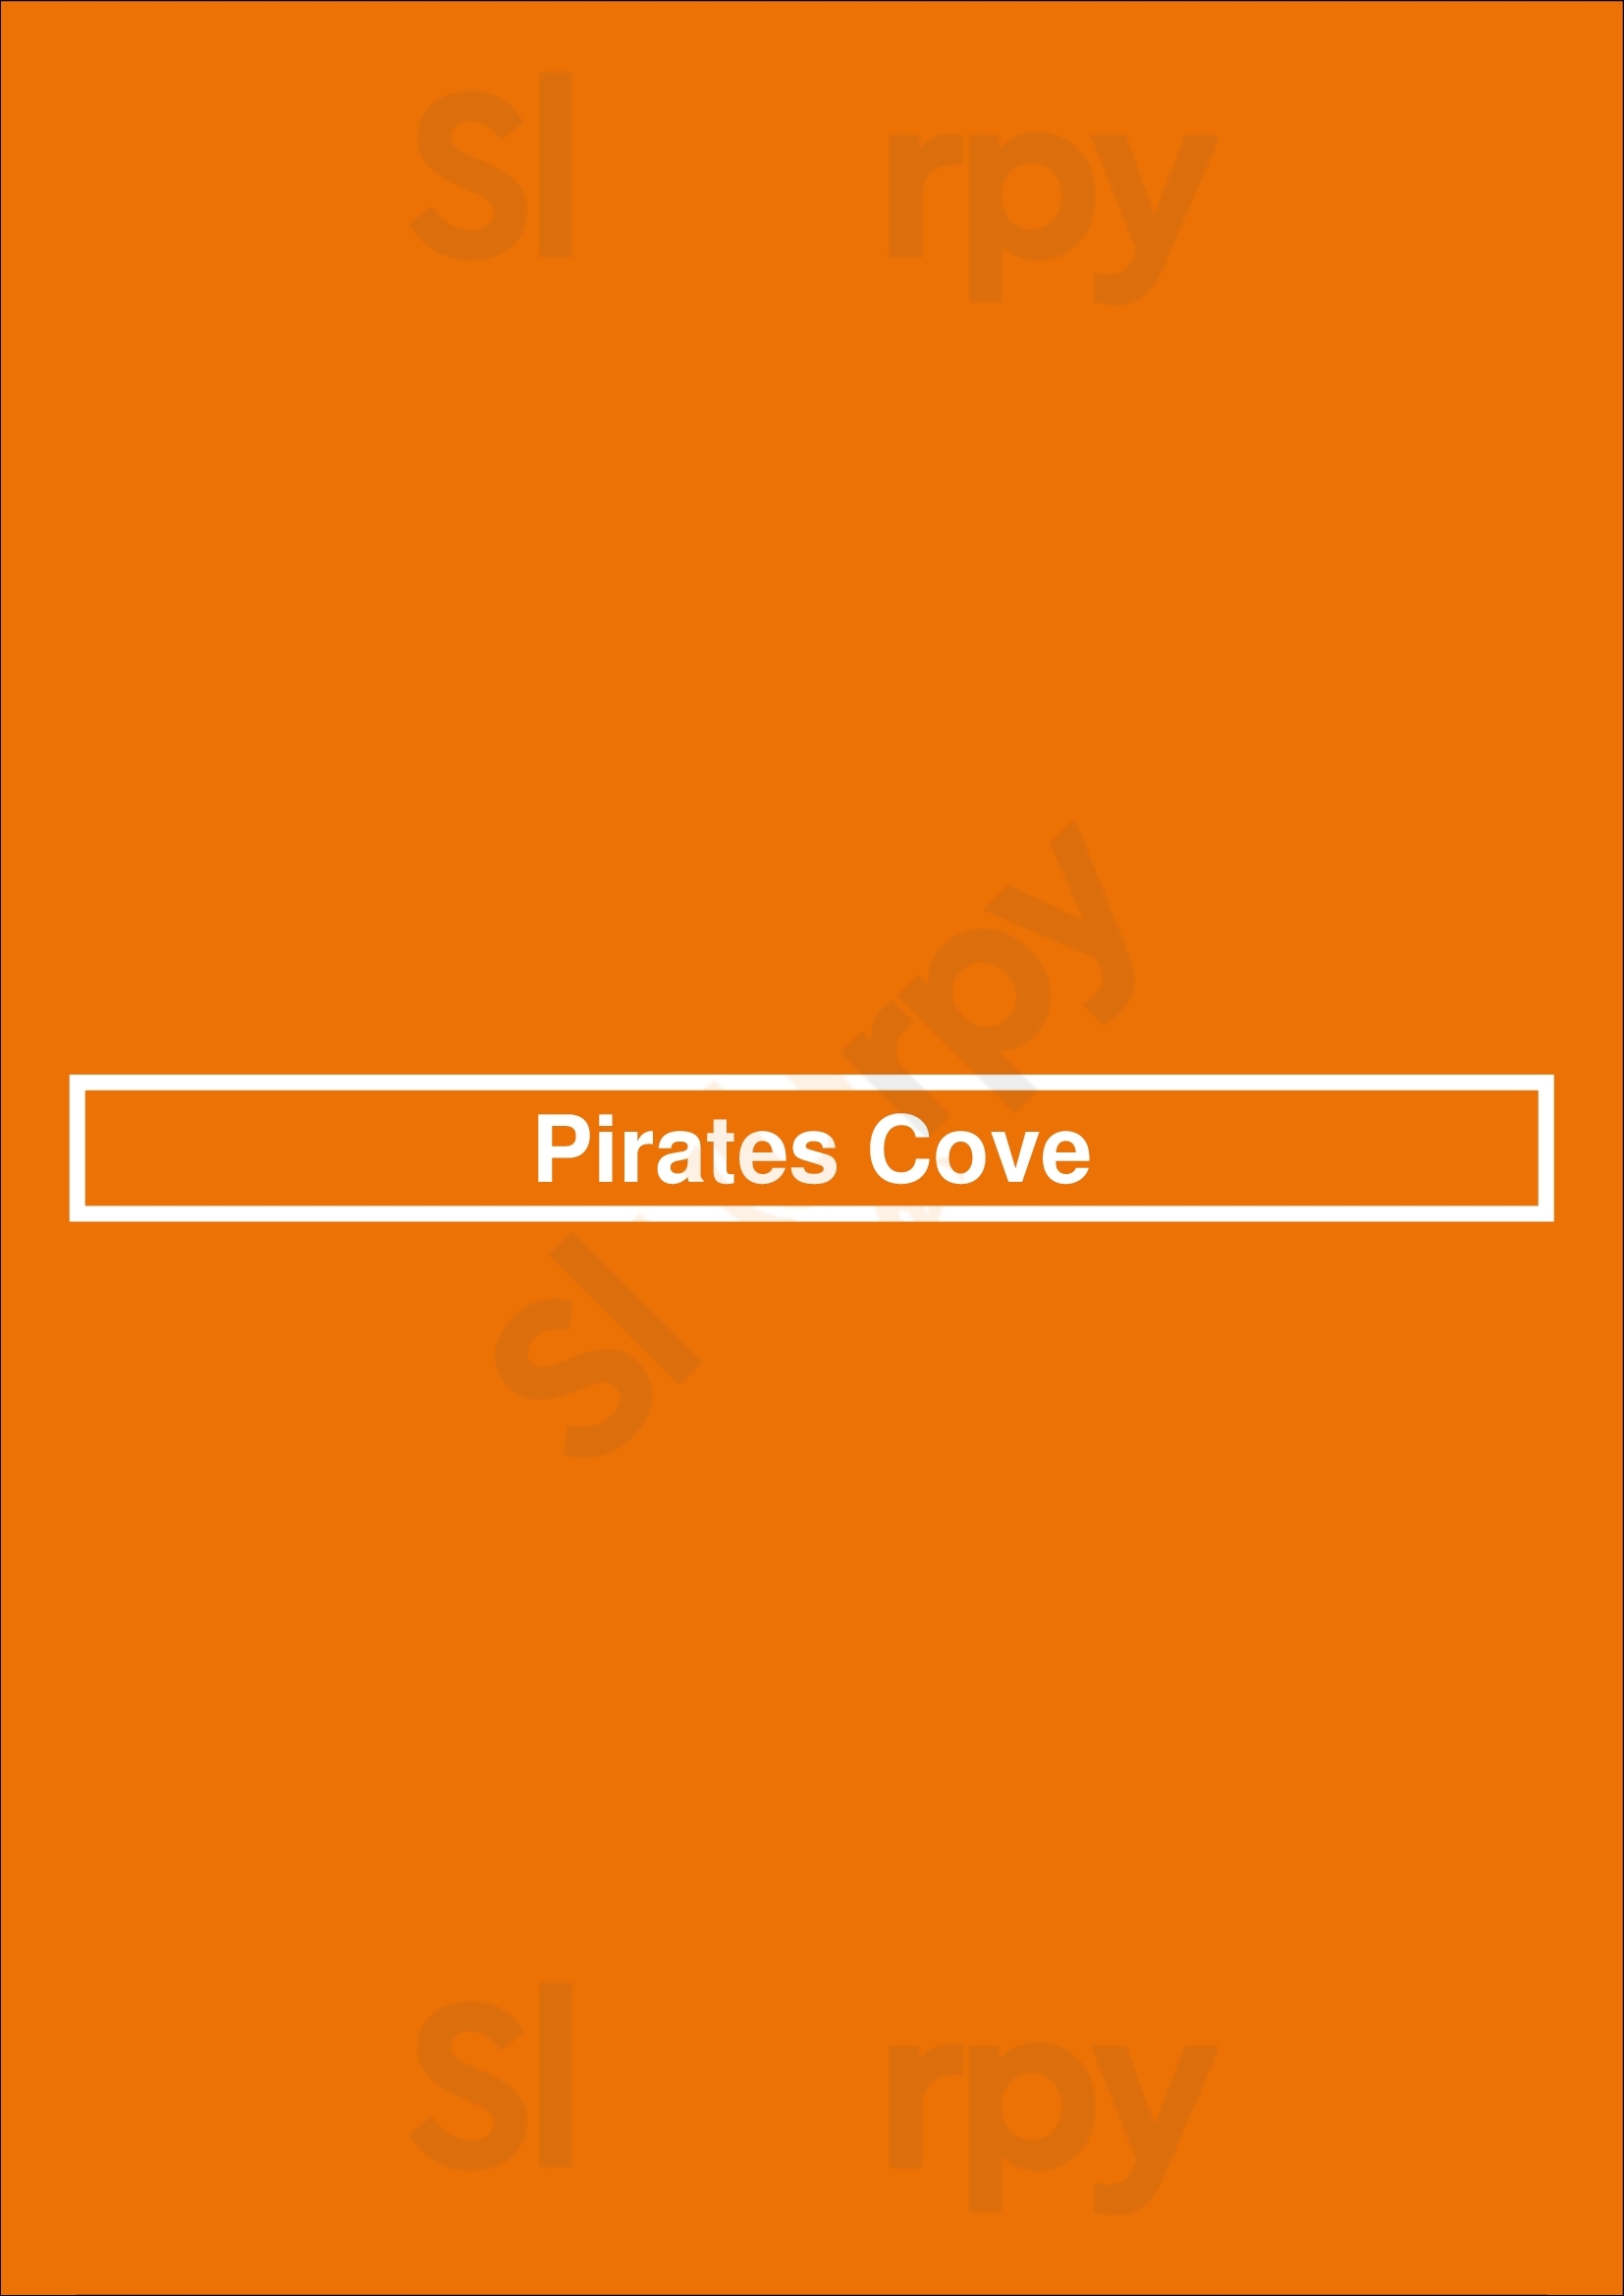 Pirates Cove Jacksonville Menu - 1